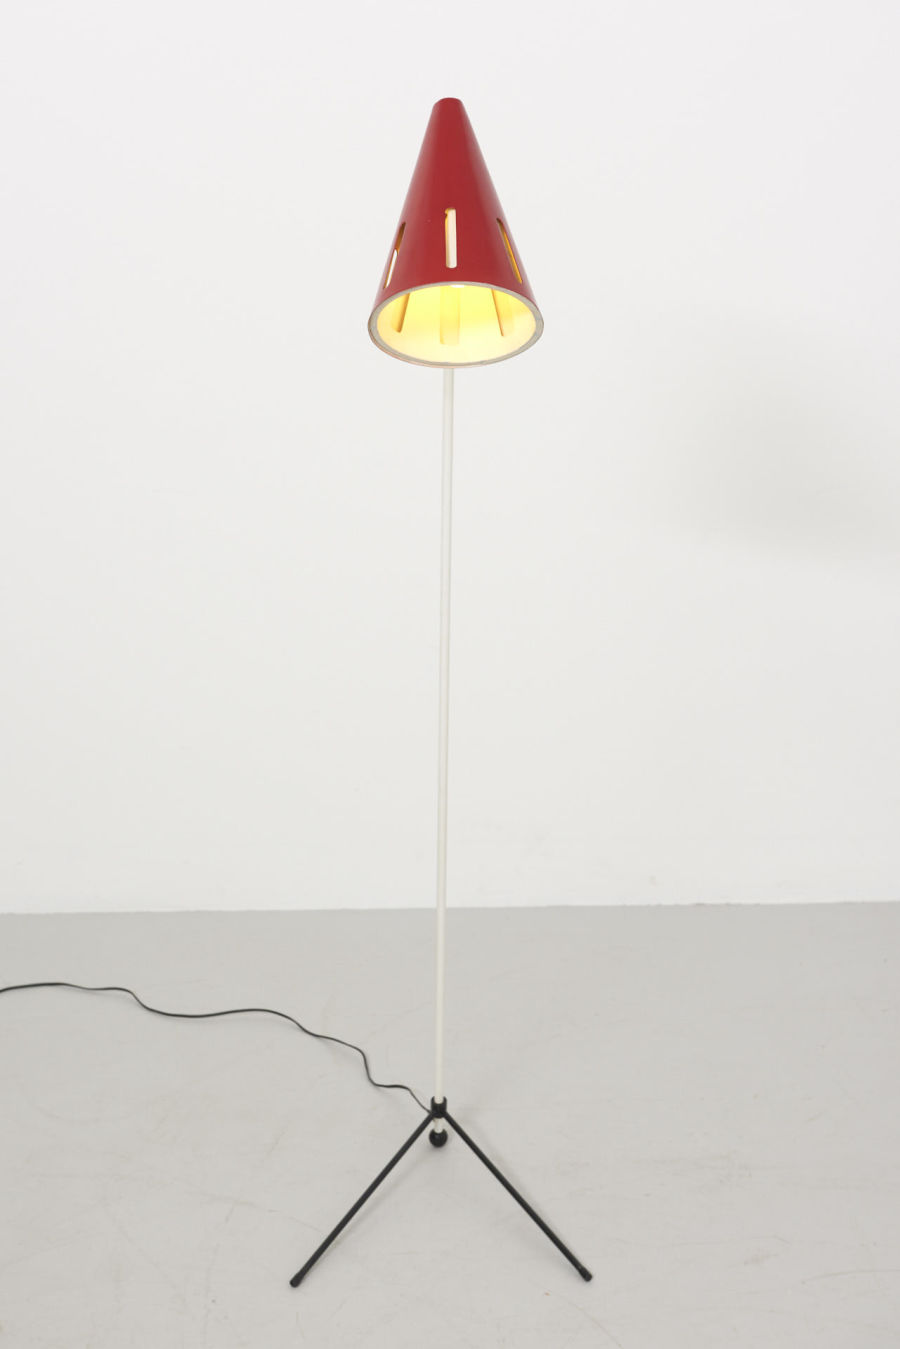 modestfurniture-vintage-2676-hala-zeist-busquet-floor-lamp-red-shade-zonneserie02